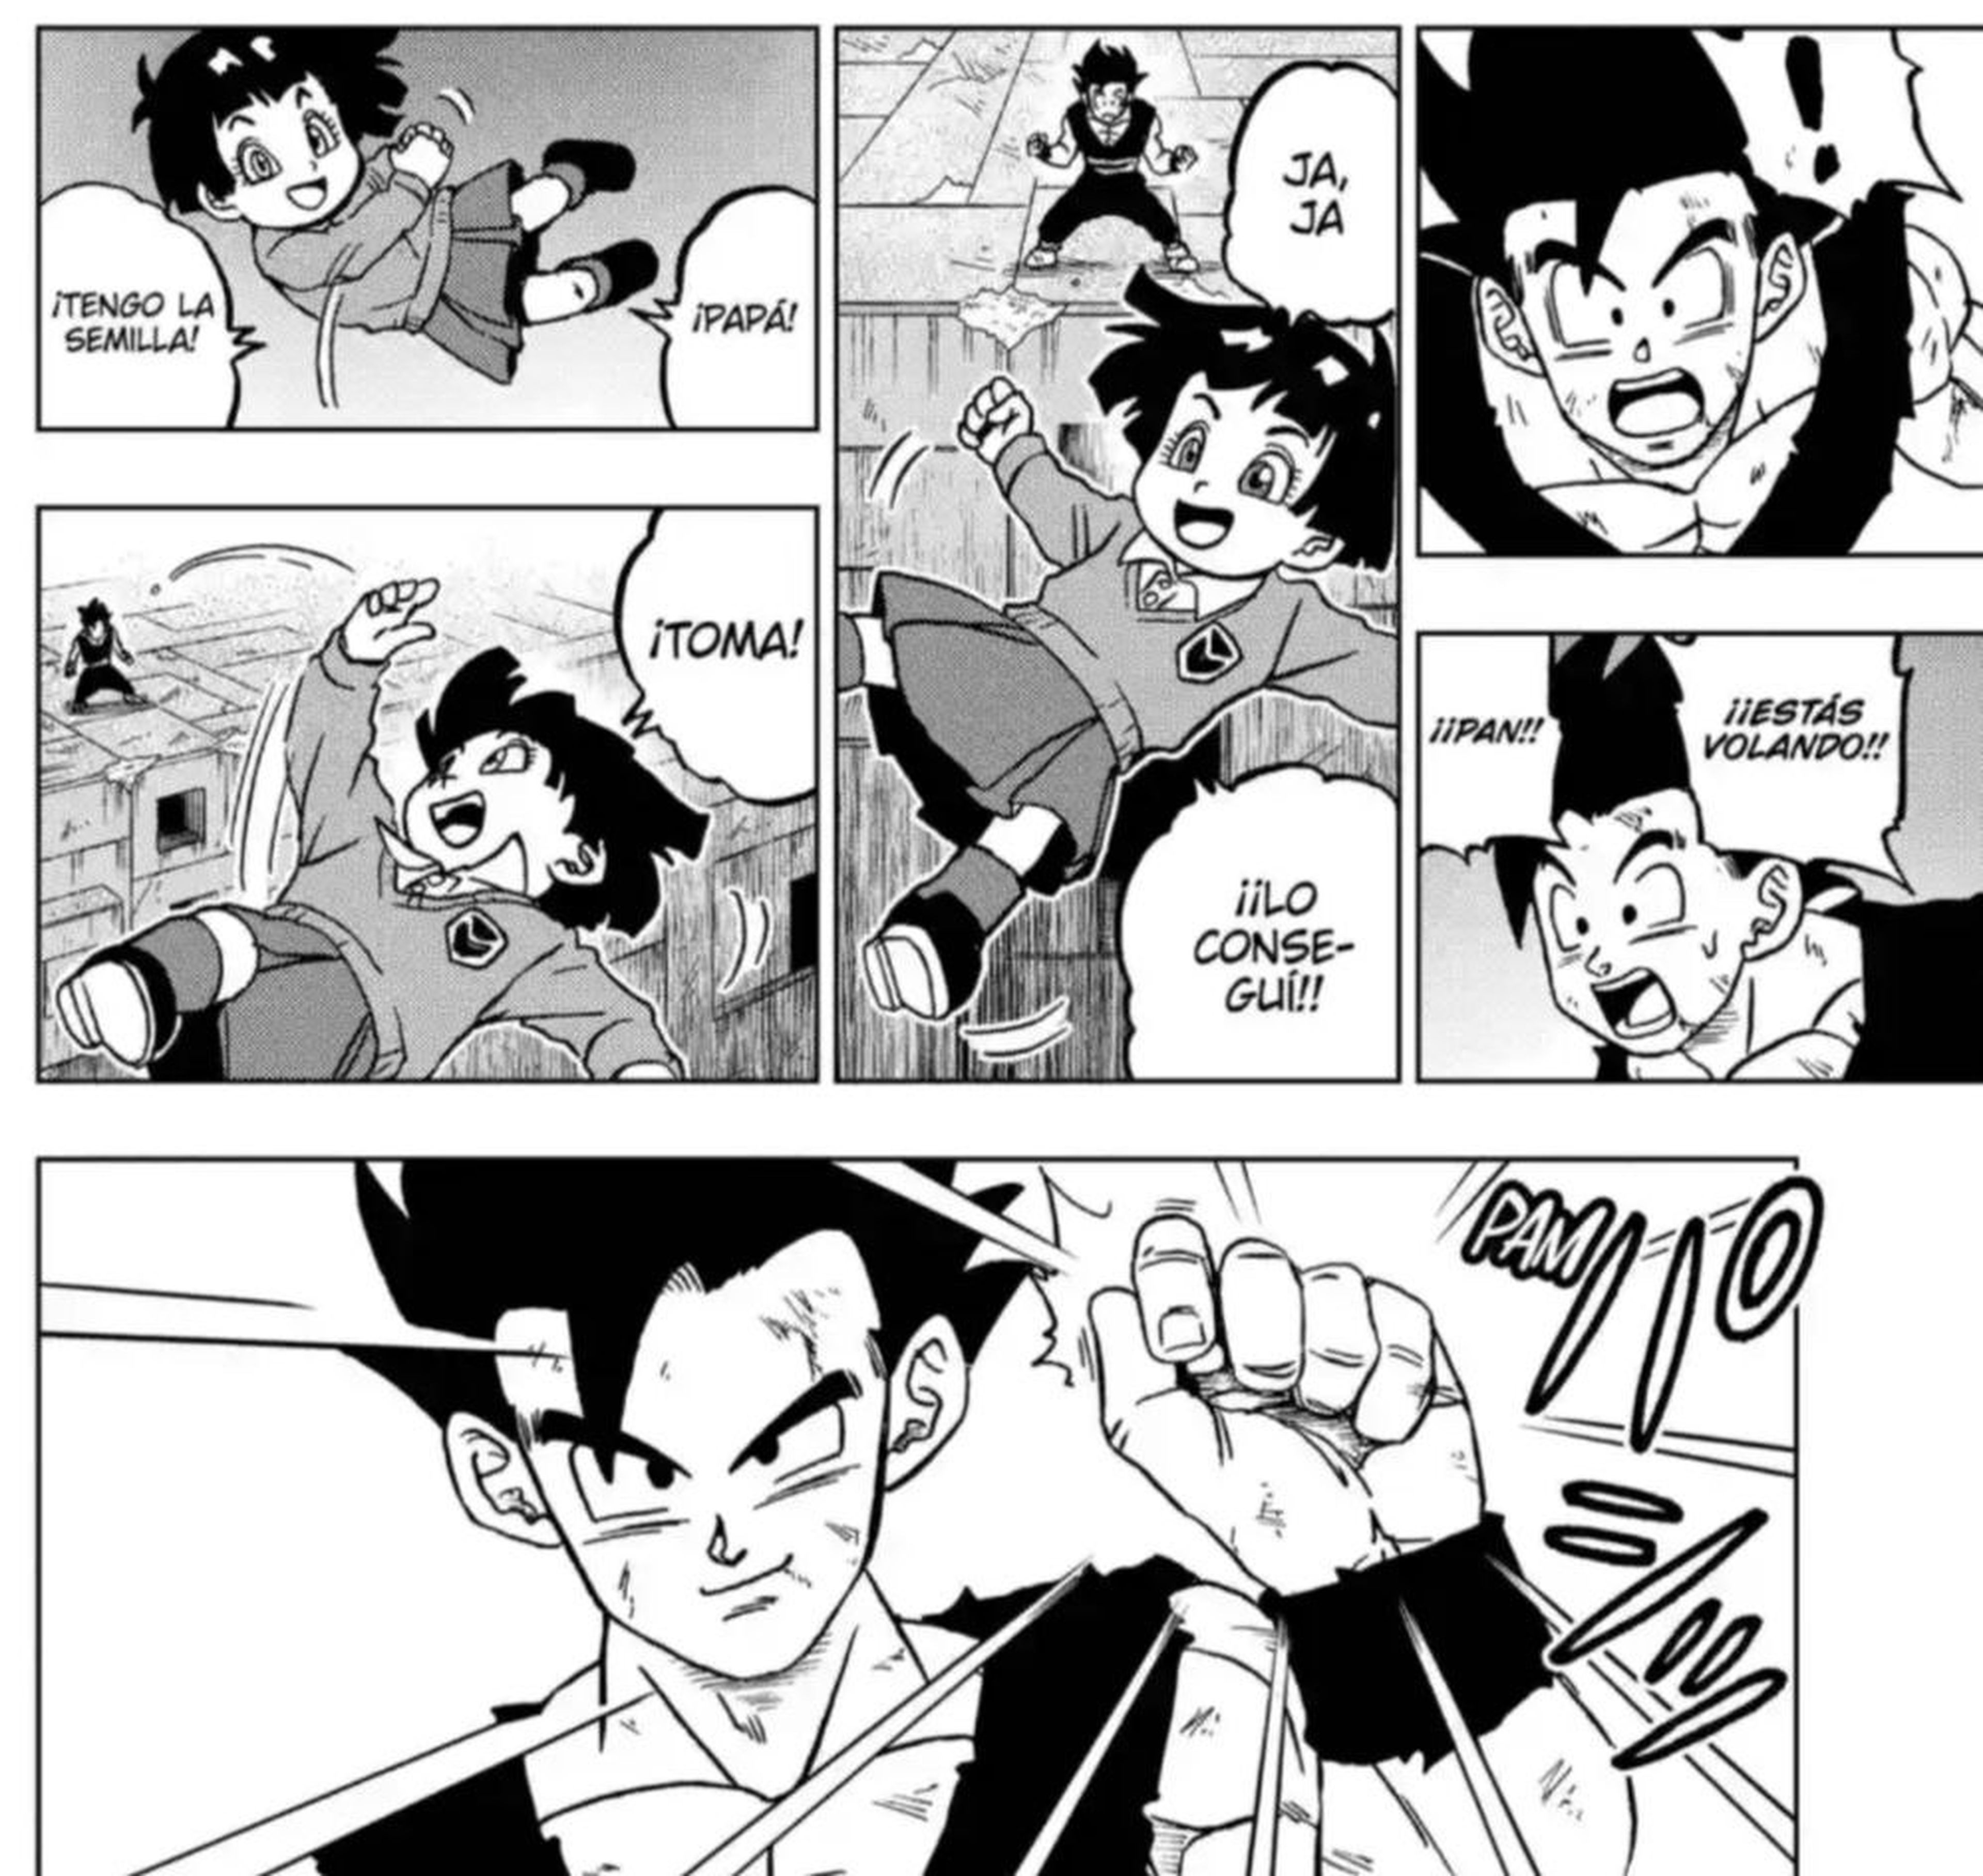 Dragon Ball Super: Borradores del capítulo 98 del manga muestran